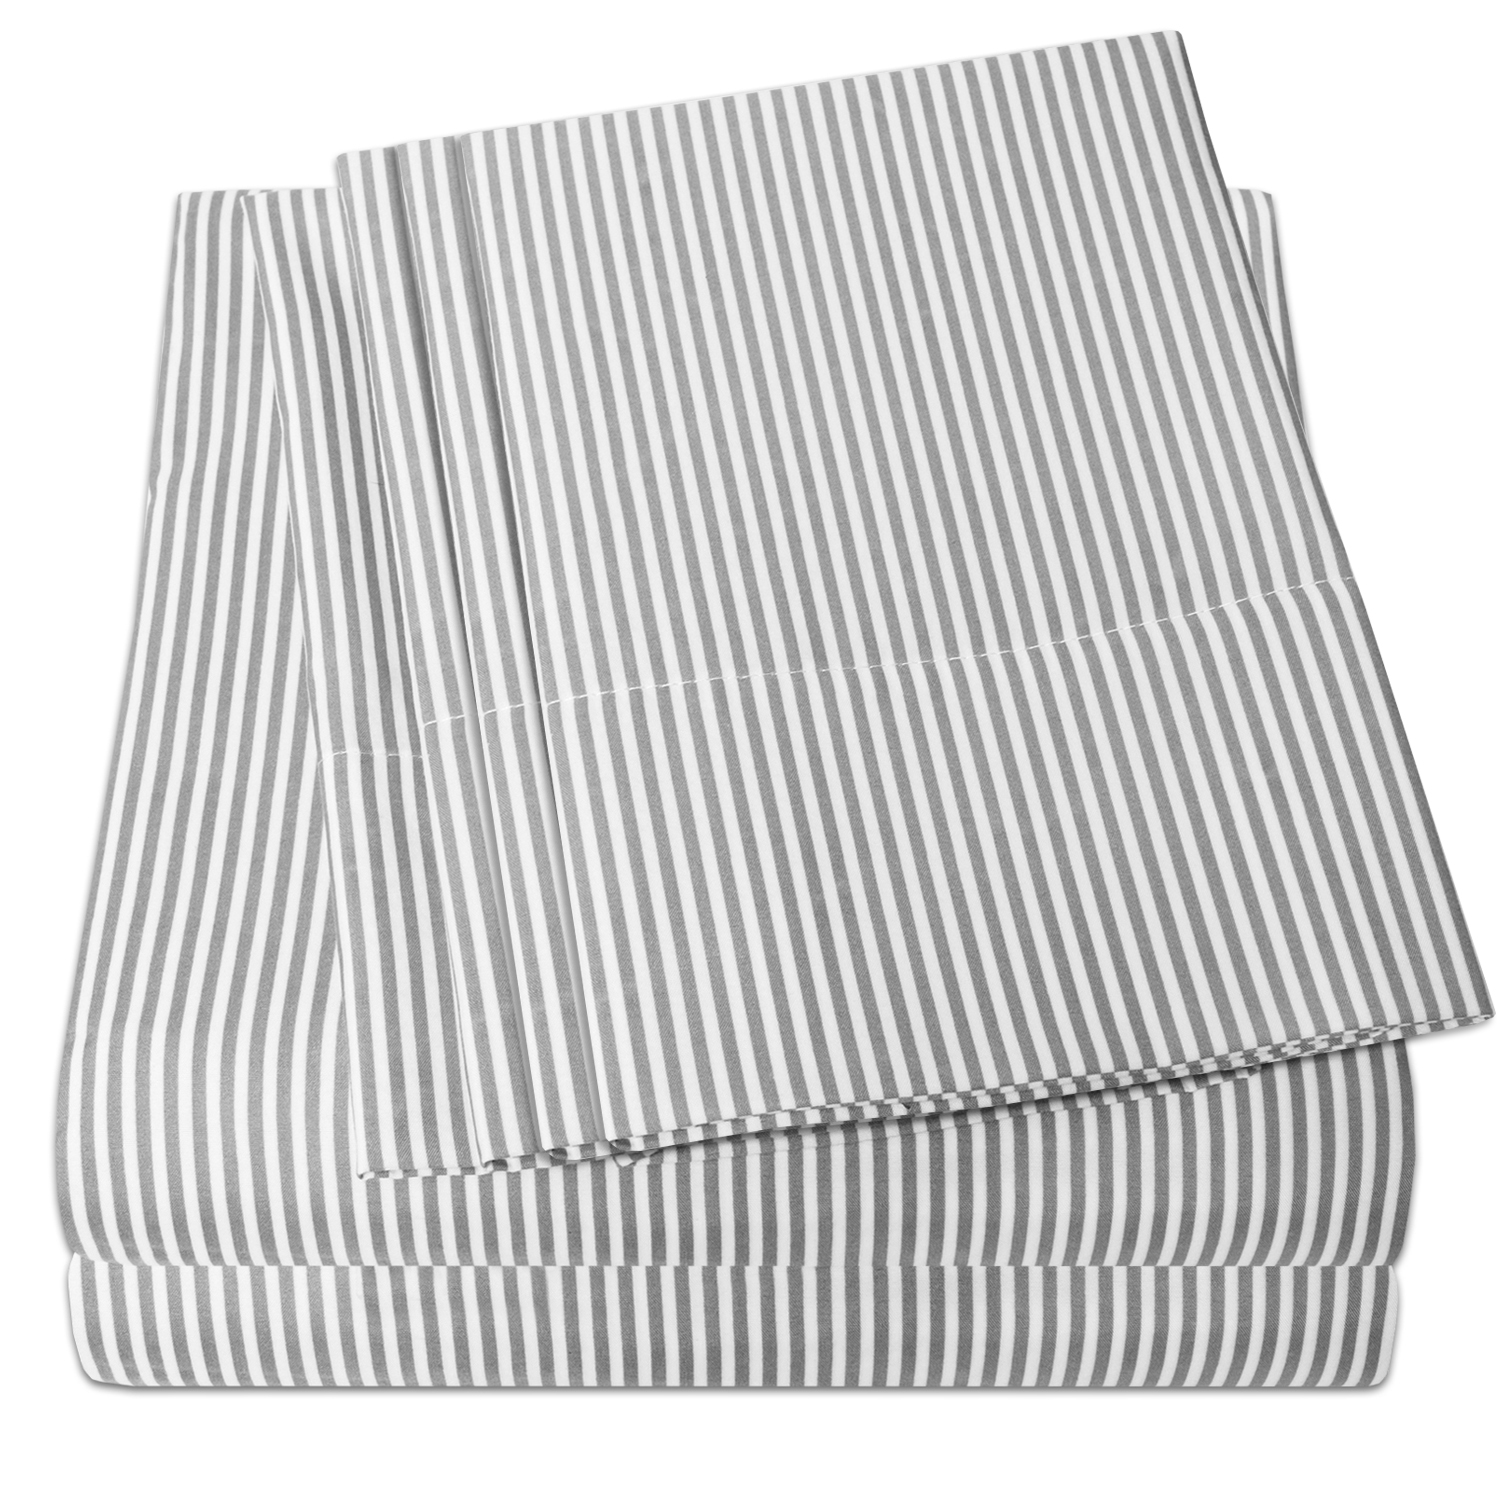 1500 Egyptian Quality Microfiber Deep Pocket Bedroom Classic Stripe Sheet Set - image 2 of 3